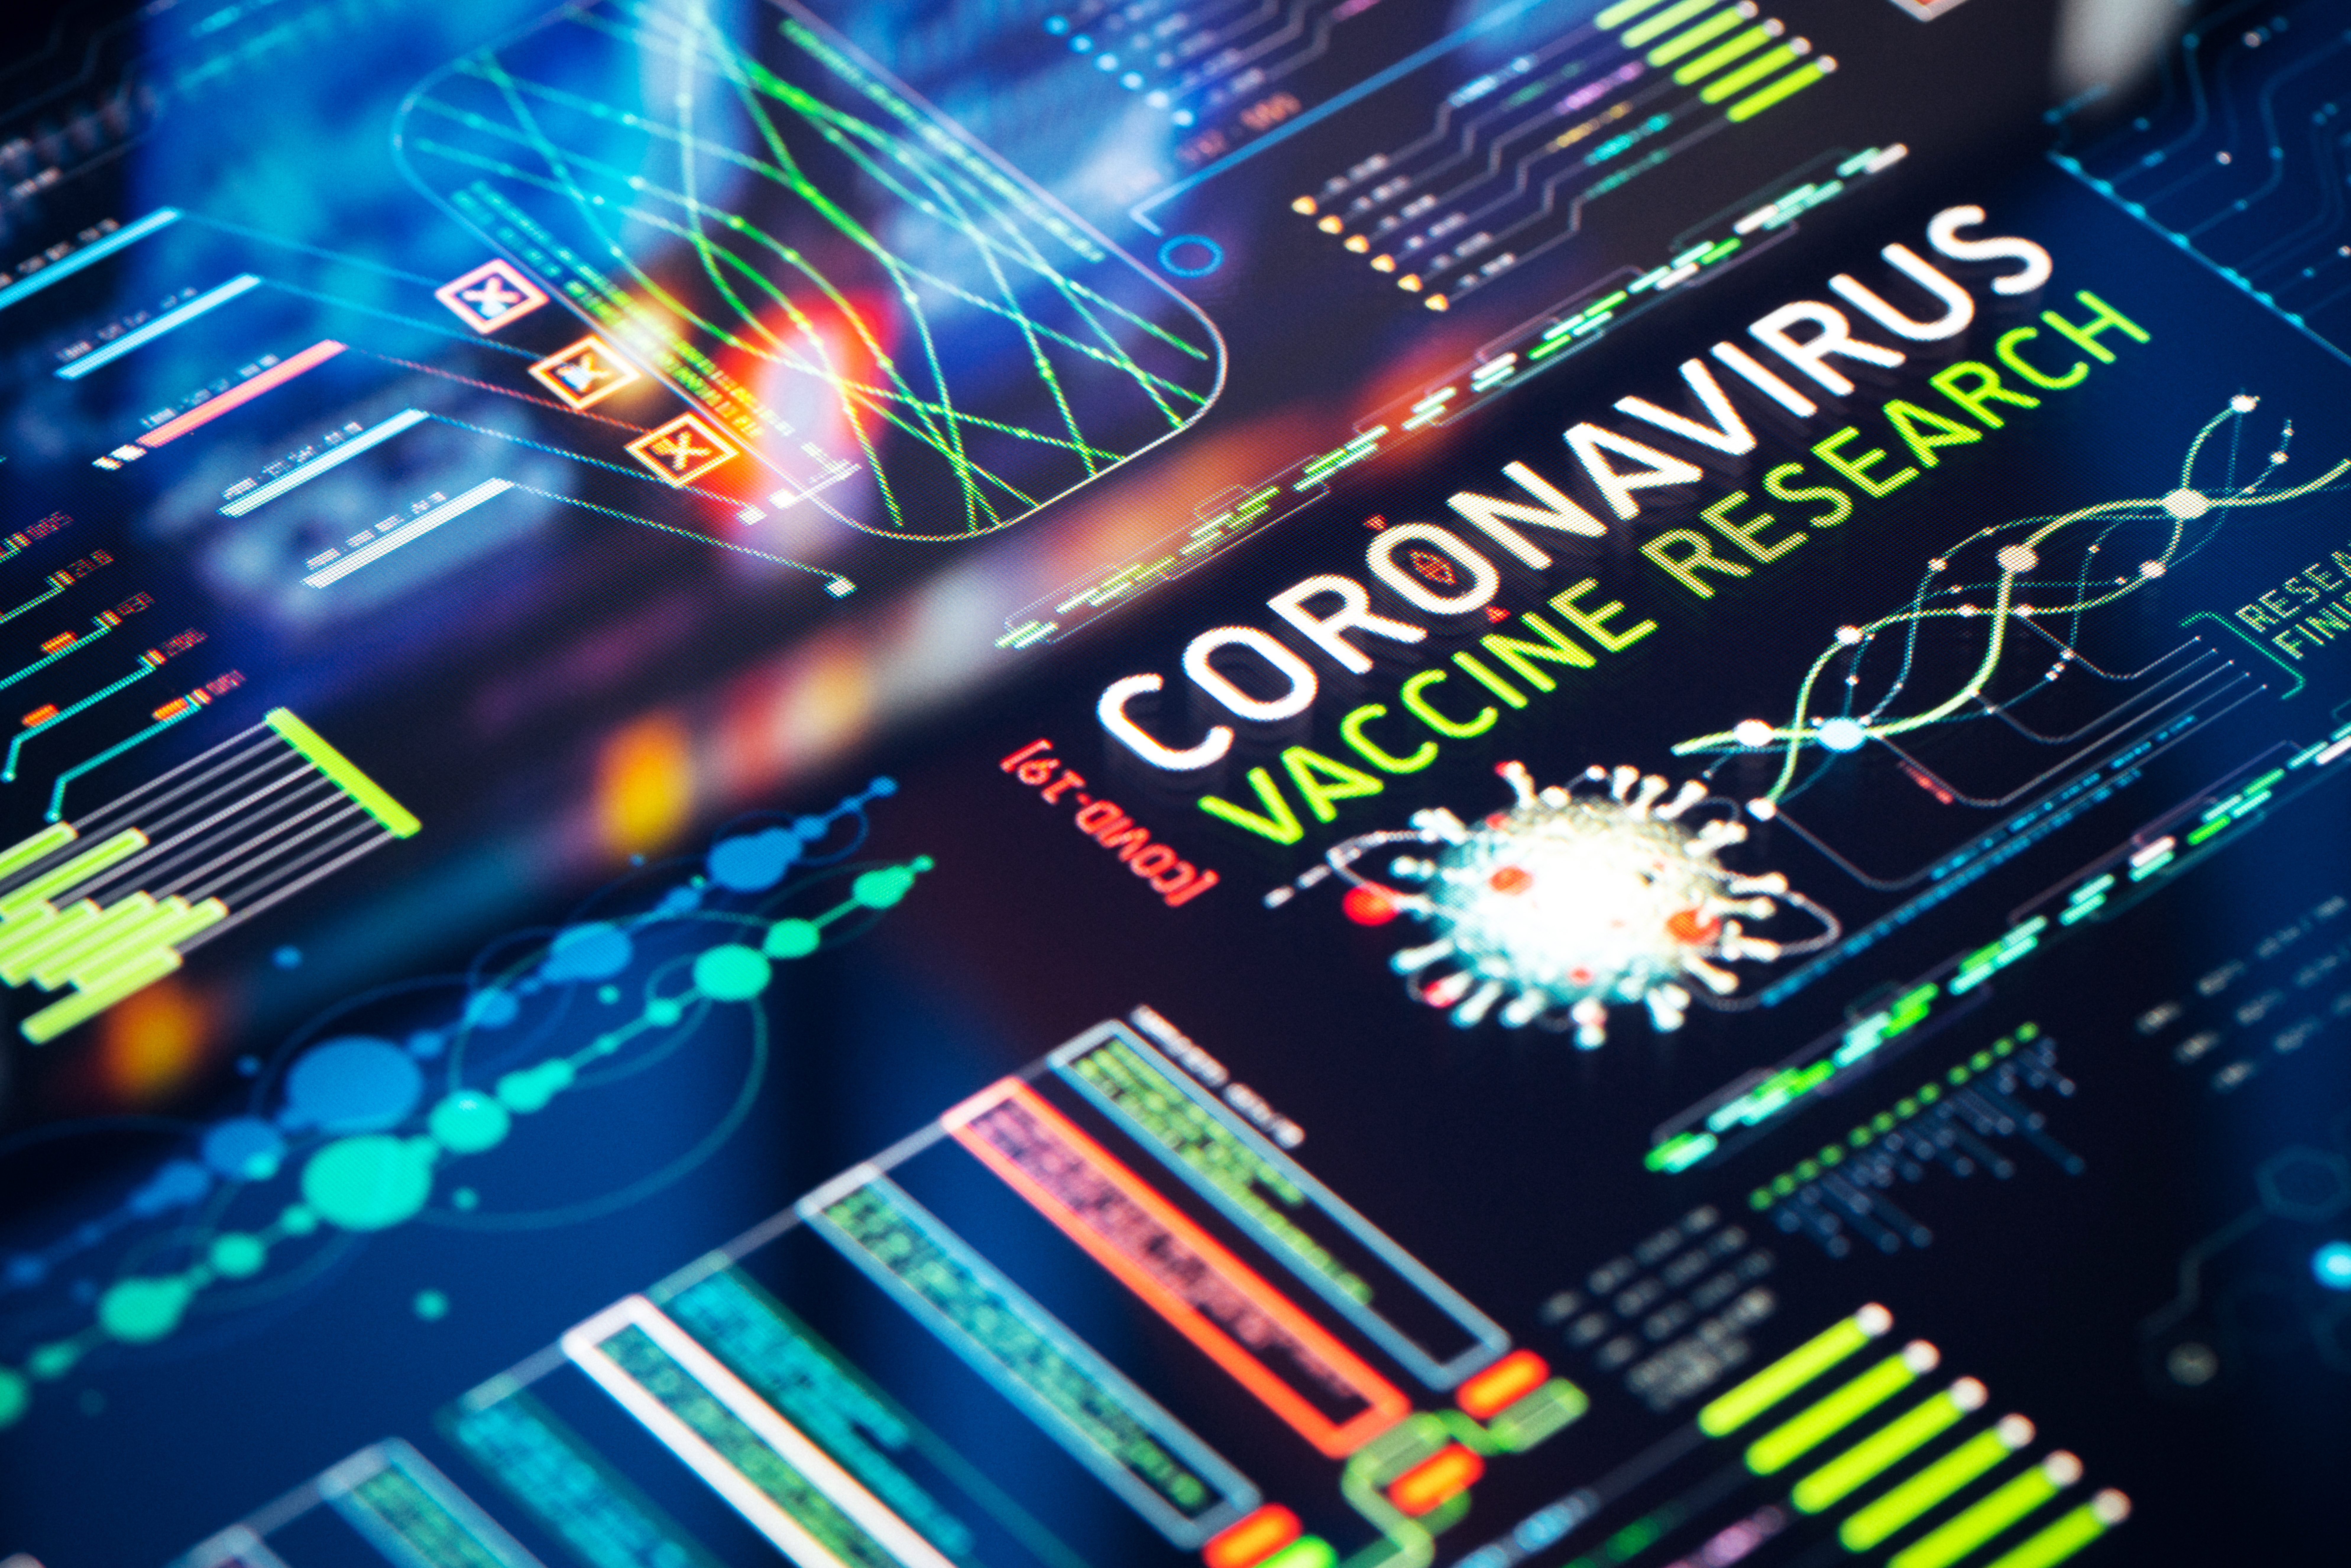 COVID-19 Coronavirus Vaccine Research Charts on Digital LCD Display